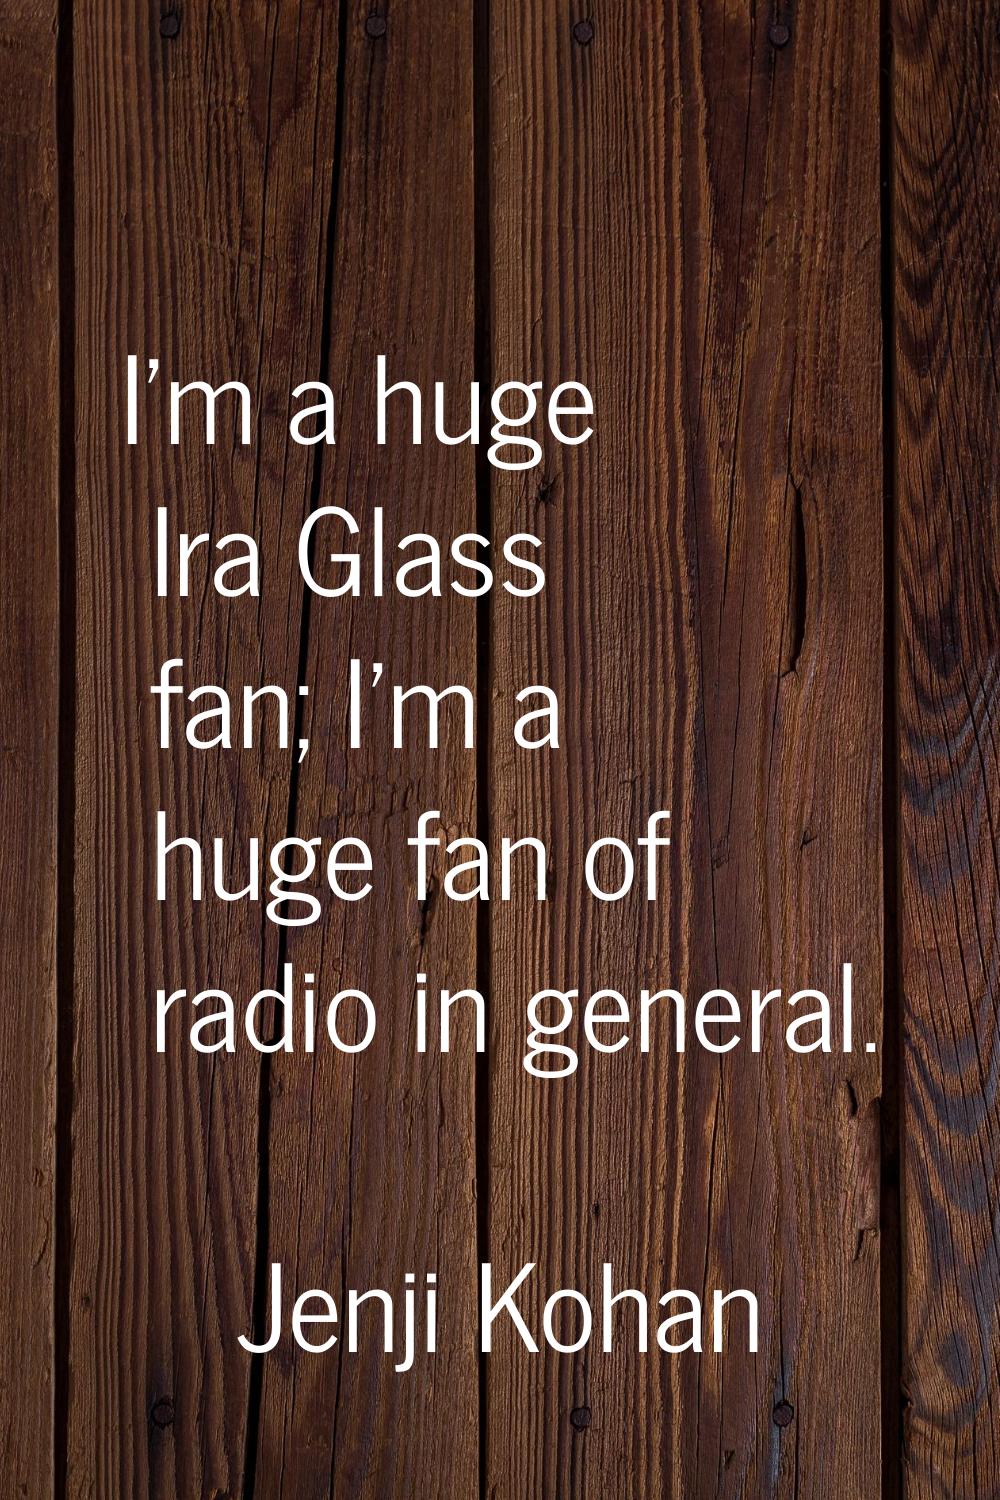 I'm a huge Ira Glass fan; I'm a huge fan of radio in general.